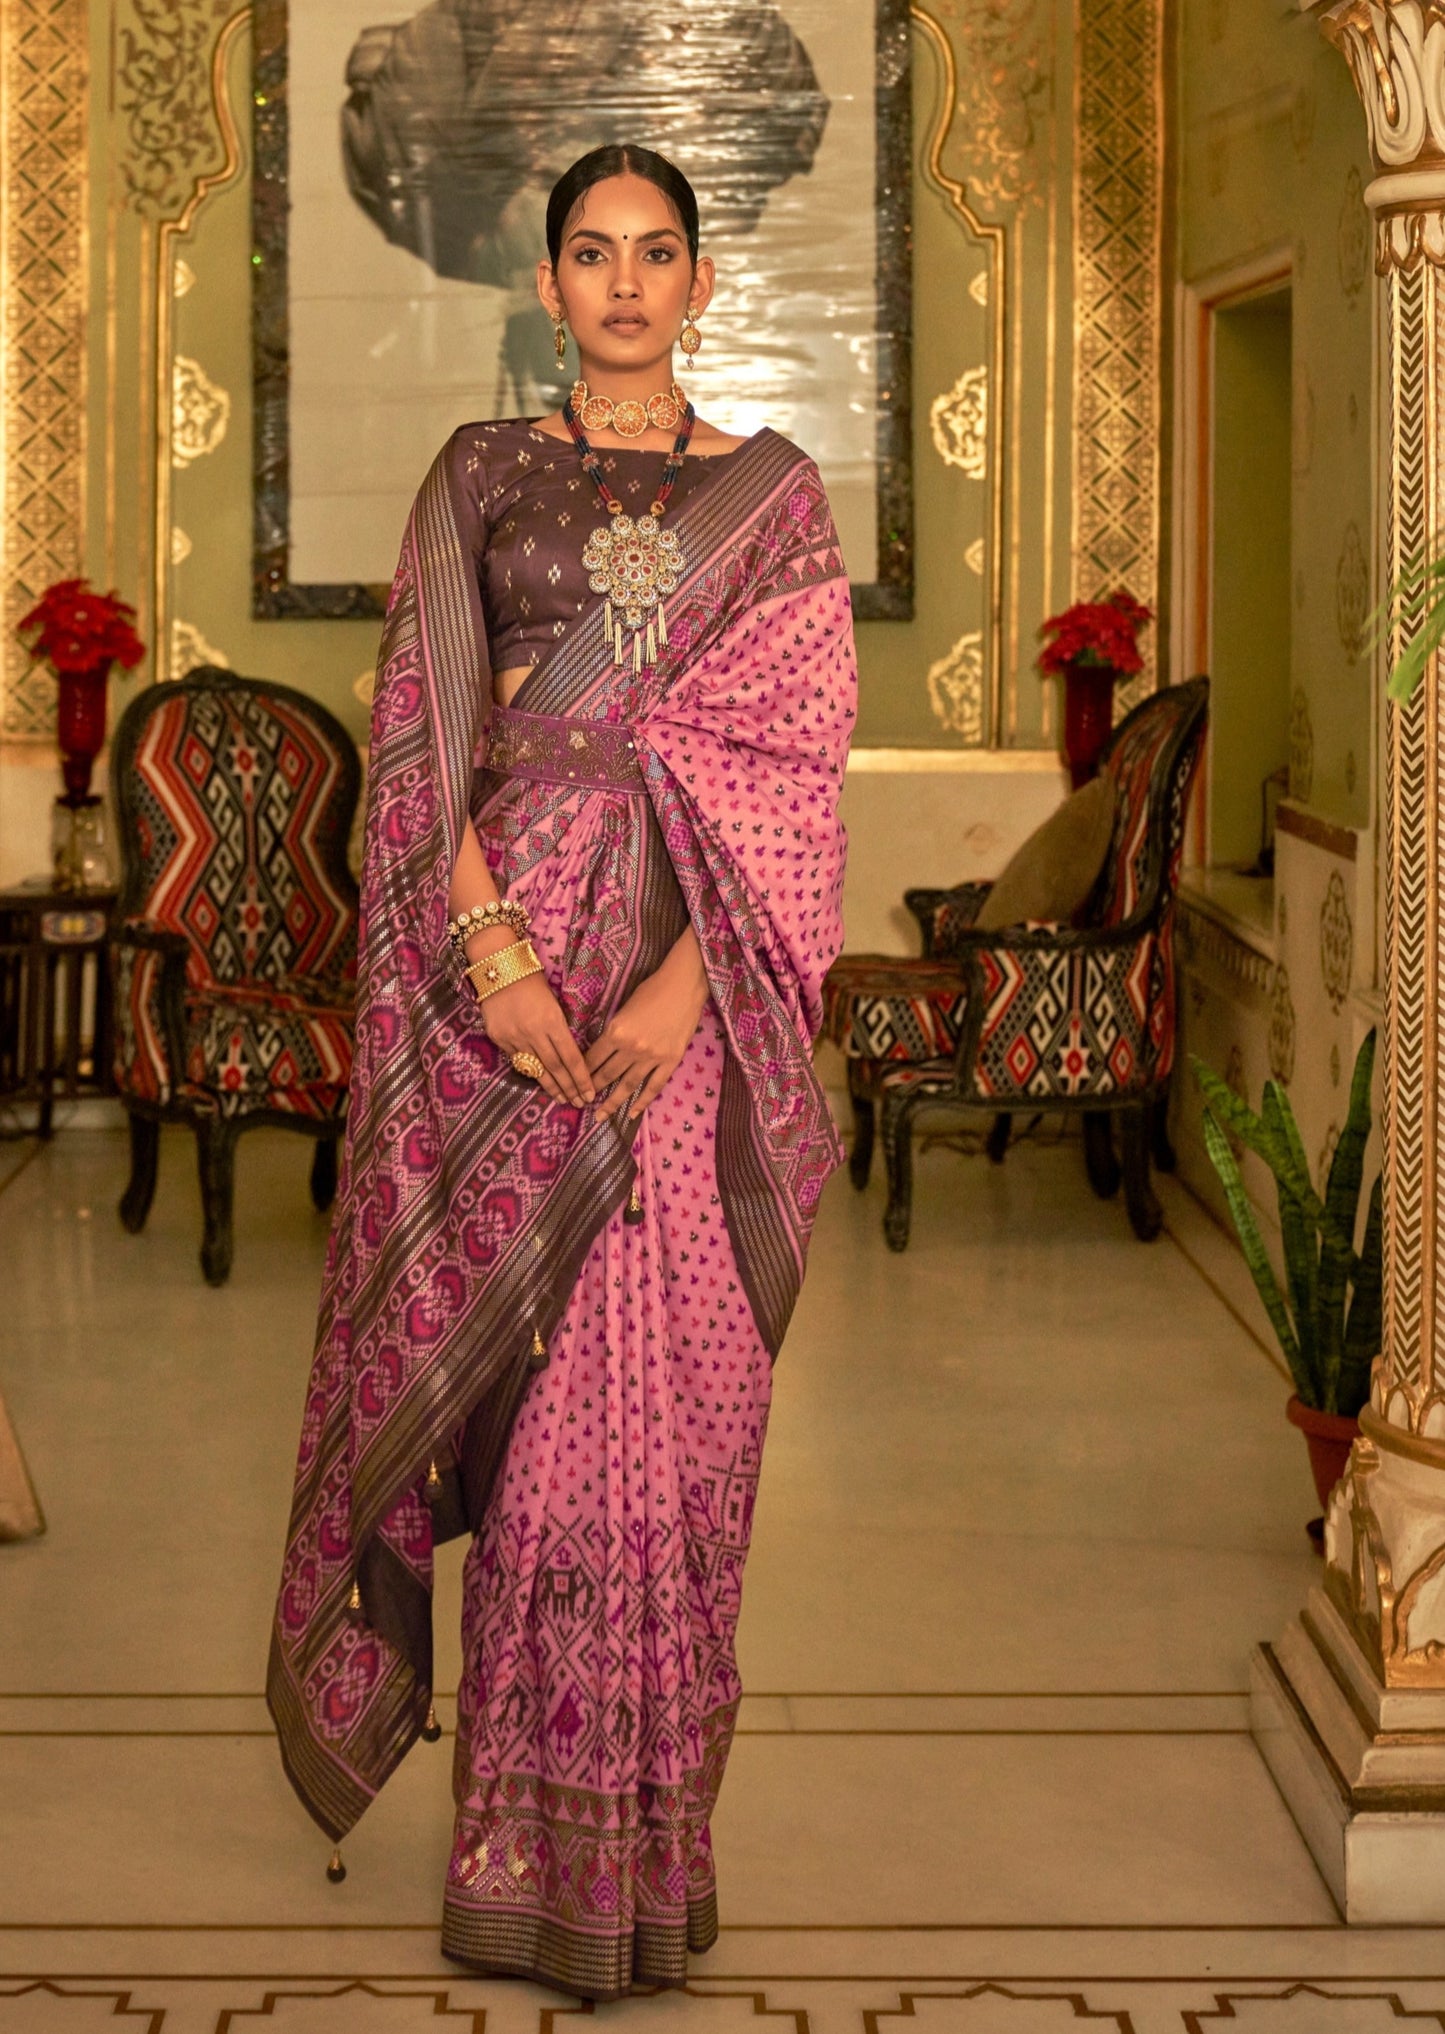 Woman in pink Patola saree